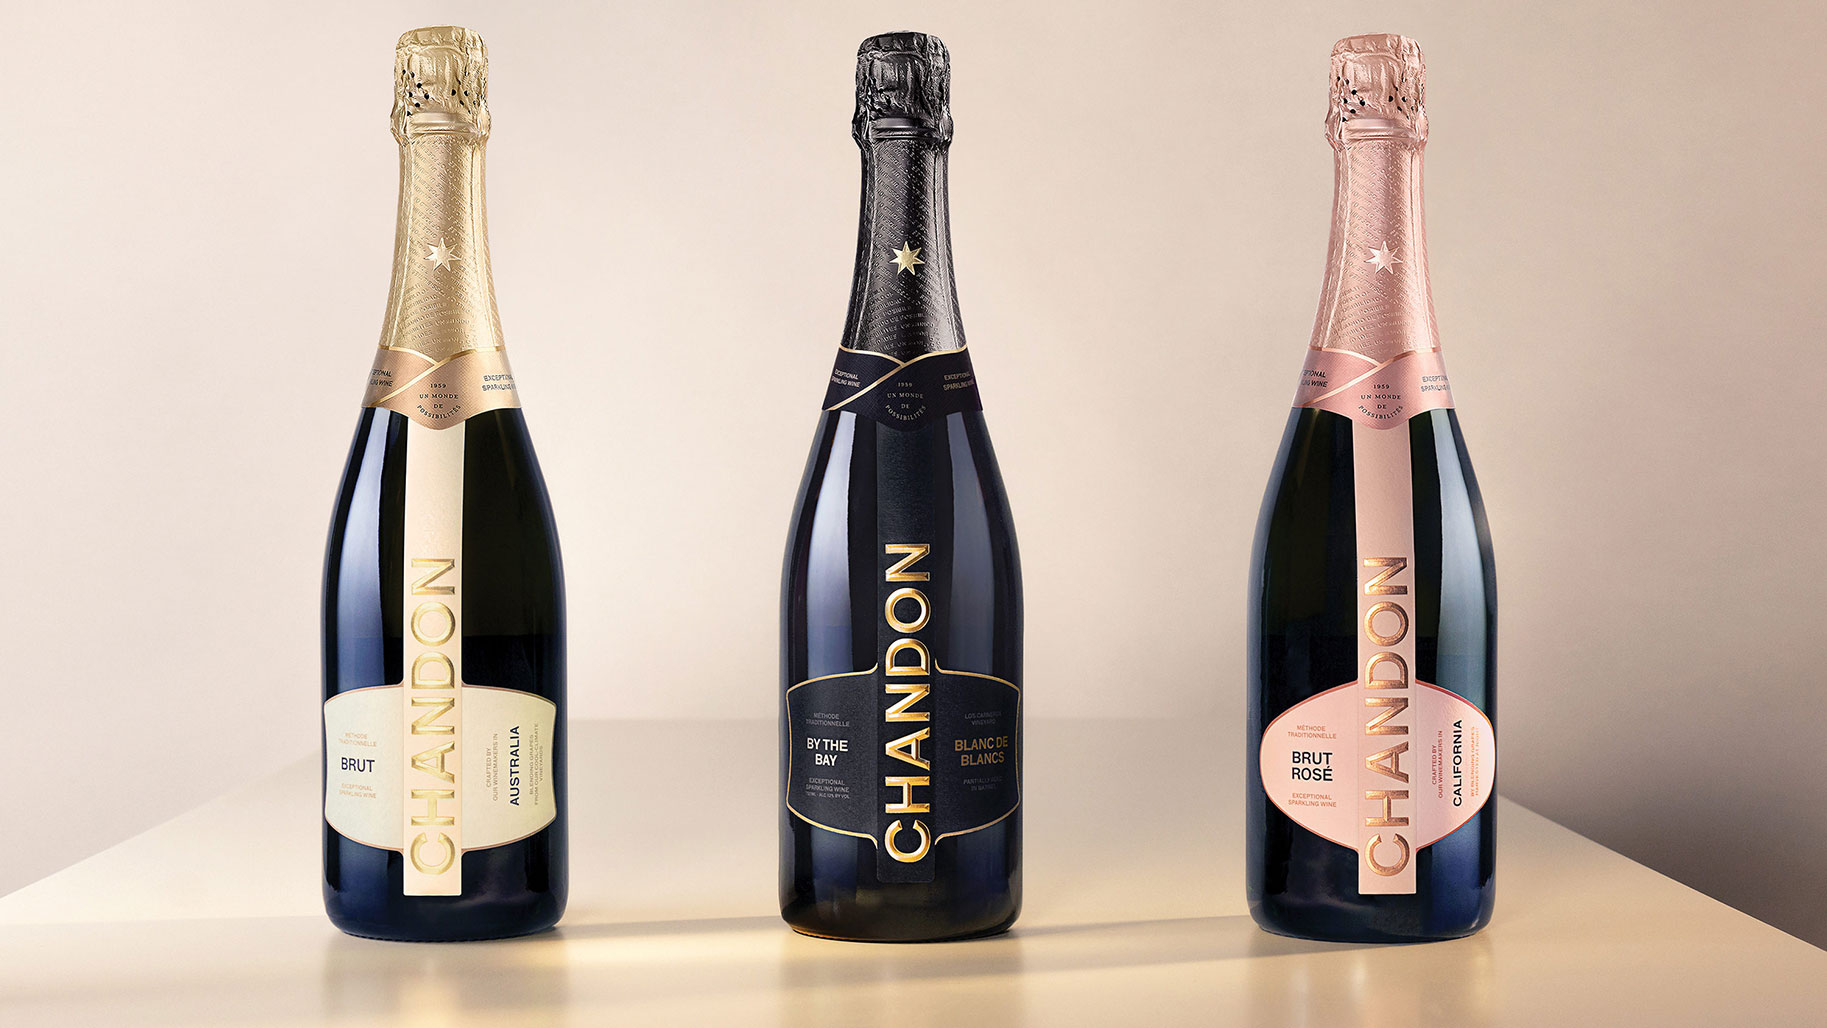 New range of Chandon sparkling wines